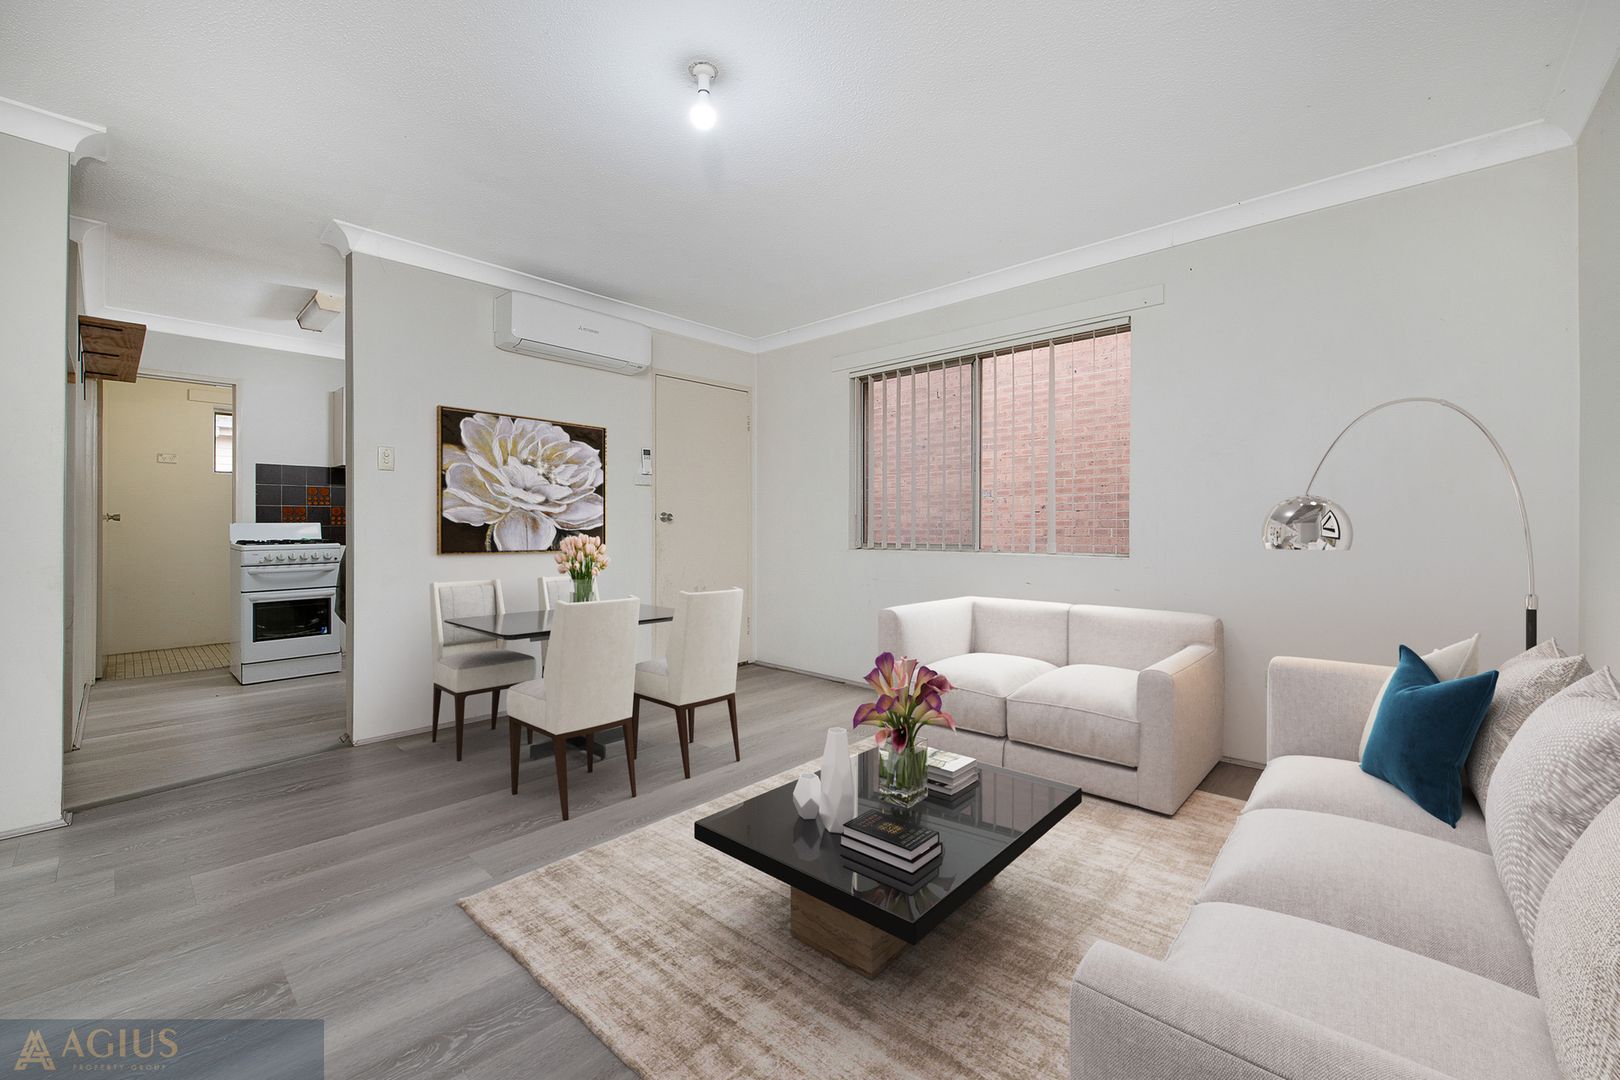 15/25-27 Lane Street, Wentworthville NSW 2145 - Apartment For Rent | Domain